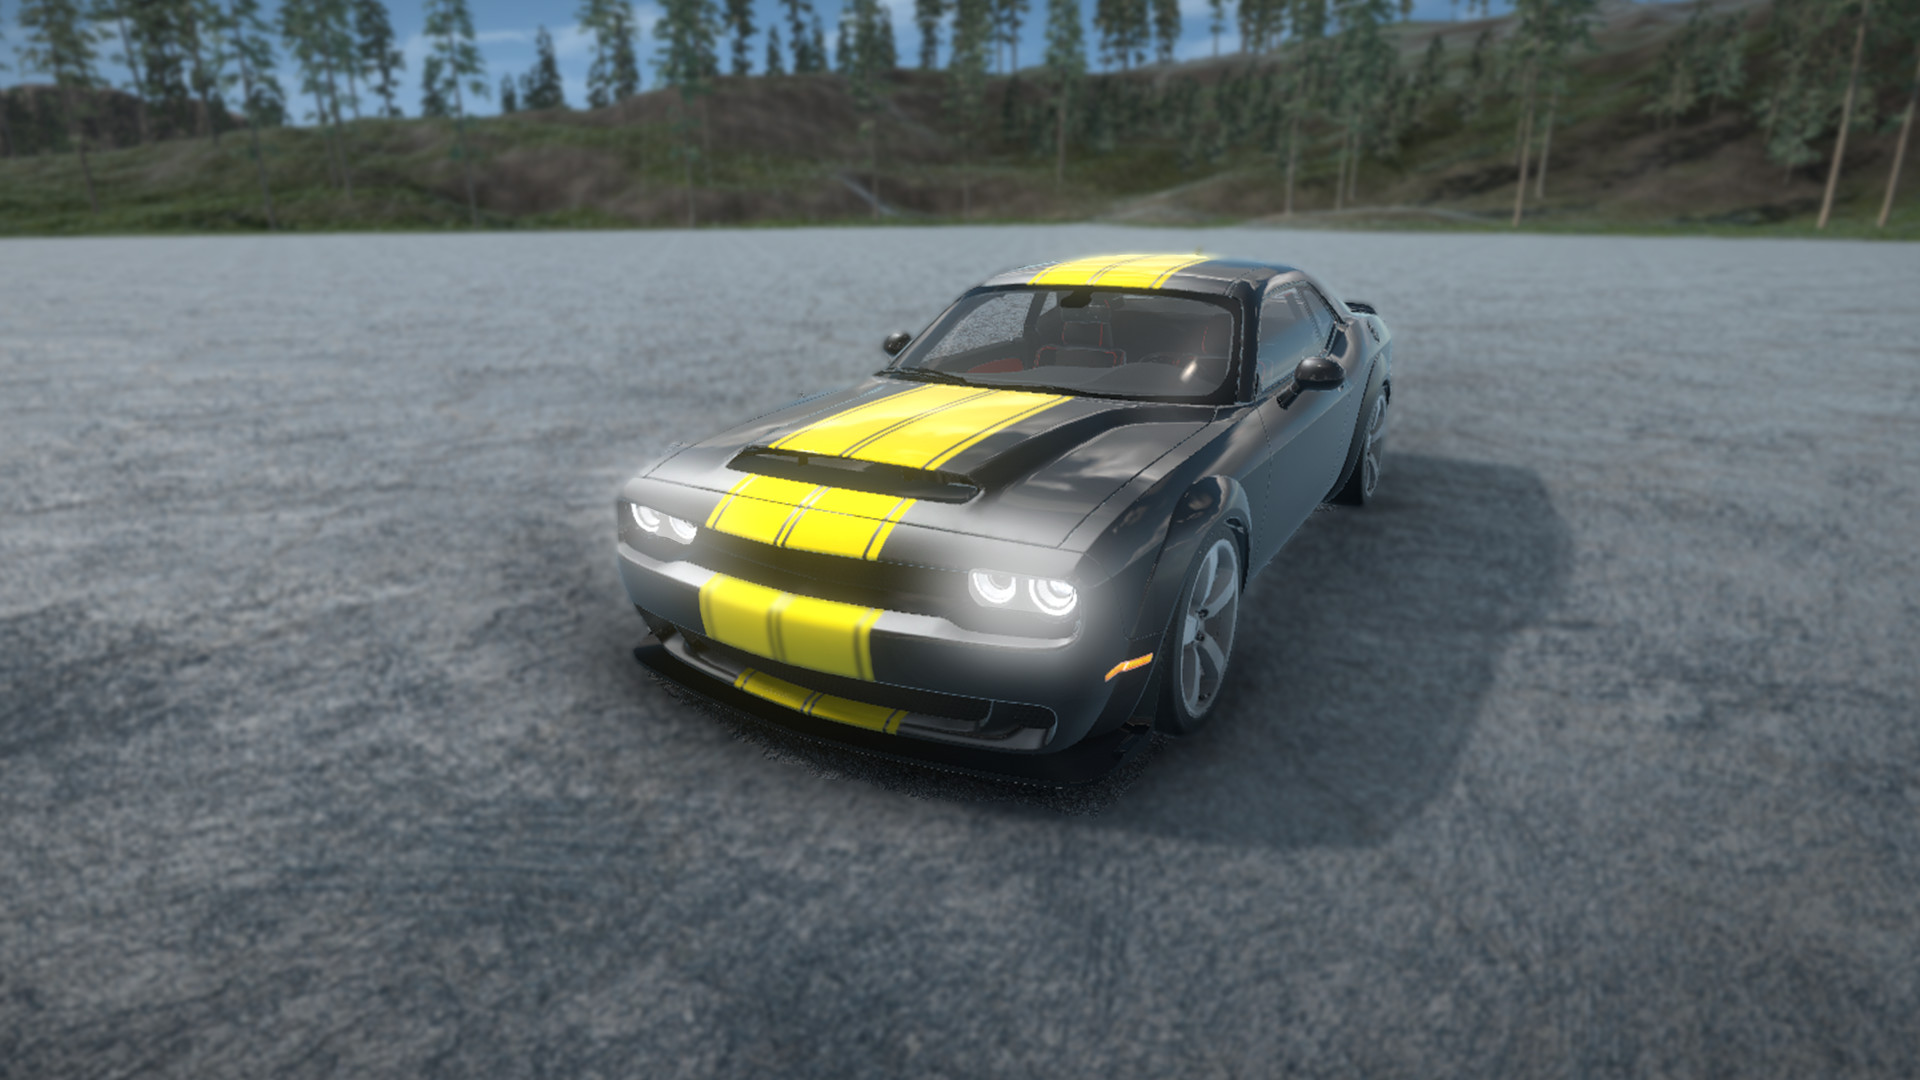 Car Physics Simulator - Sports Car #1 Featured Screenshot #1